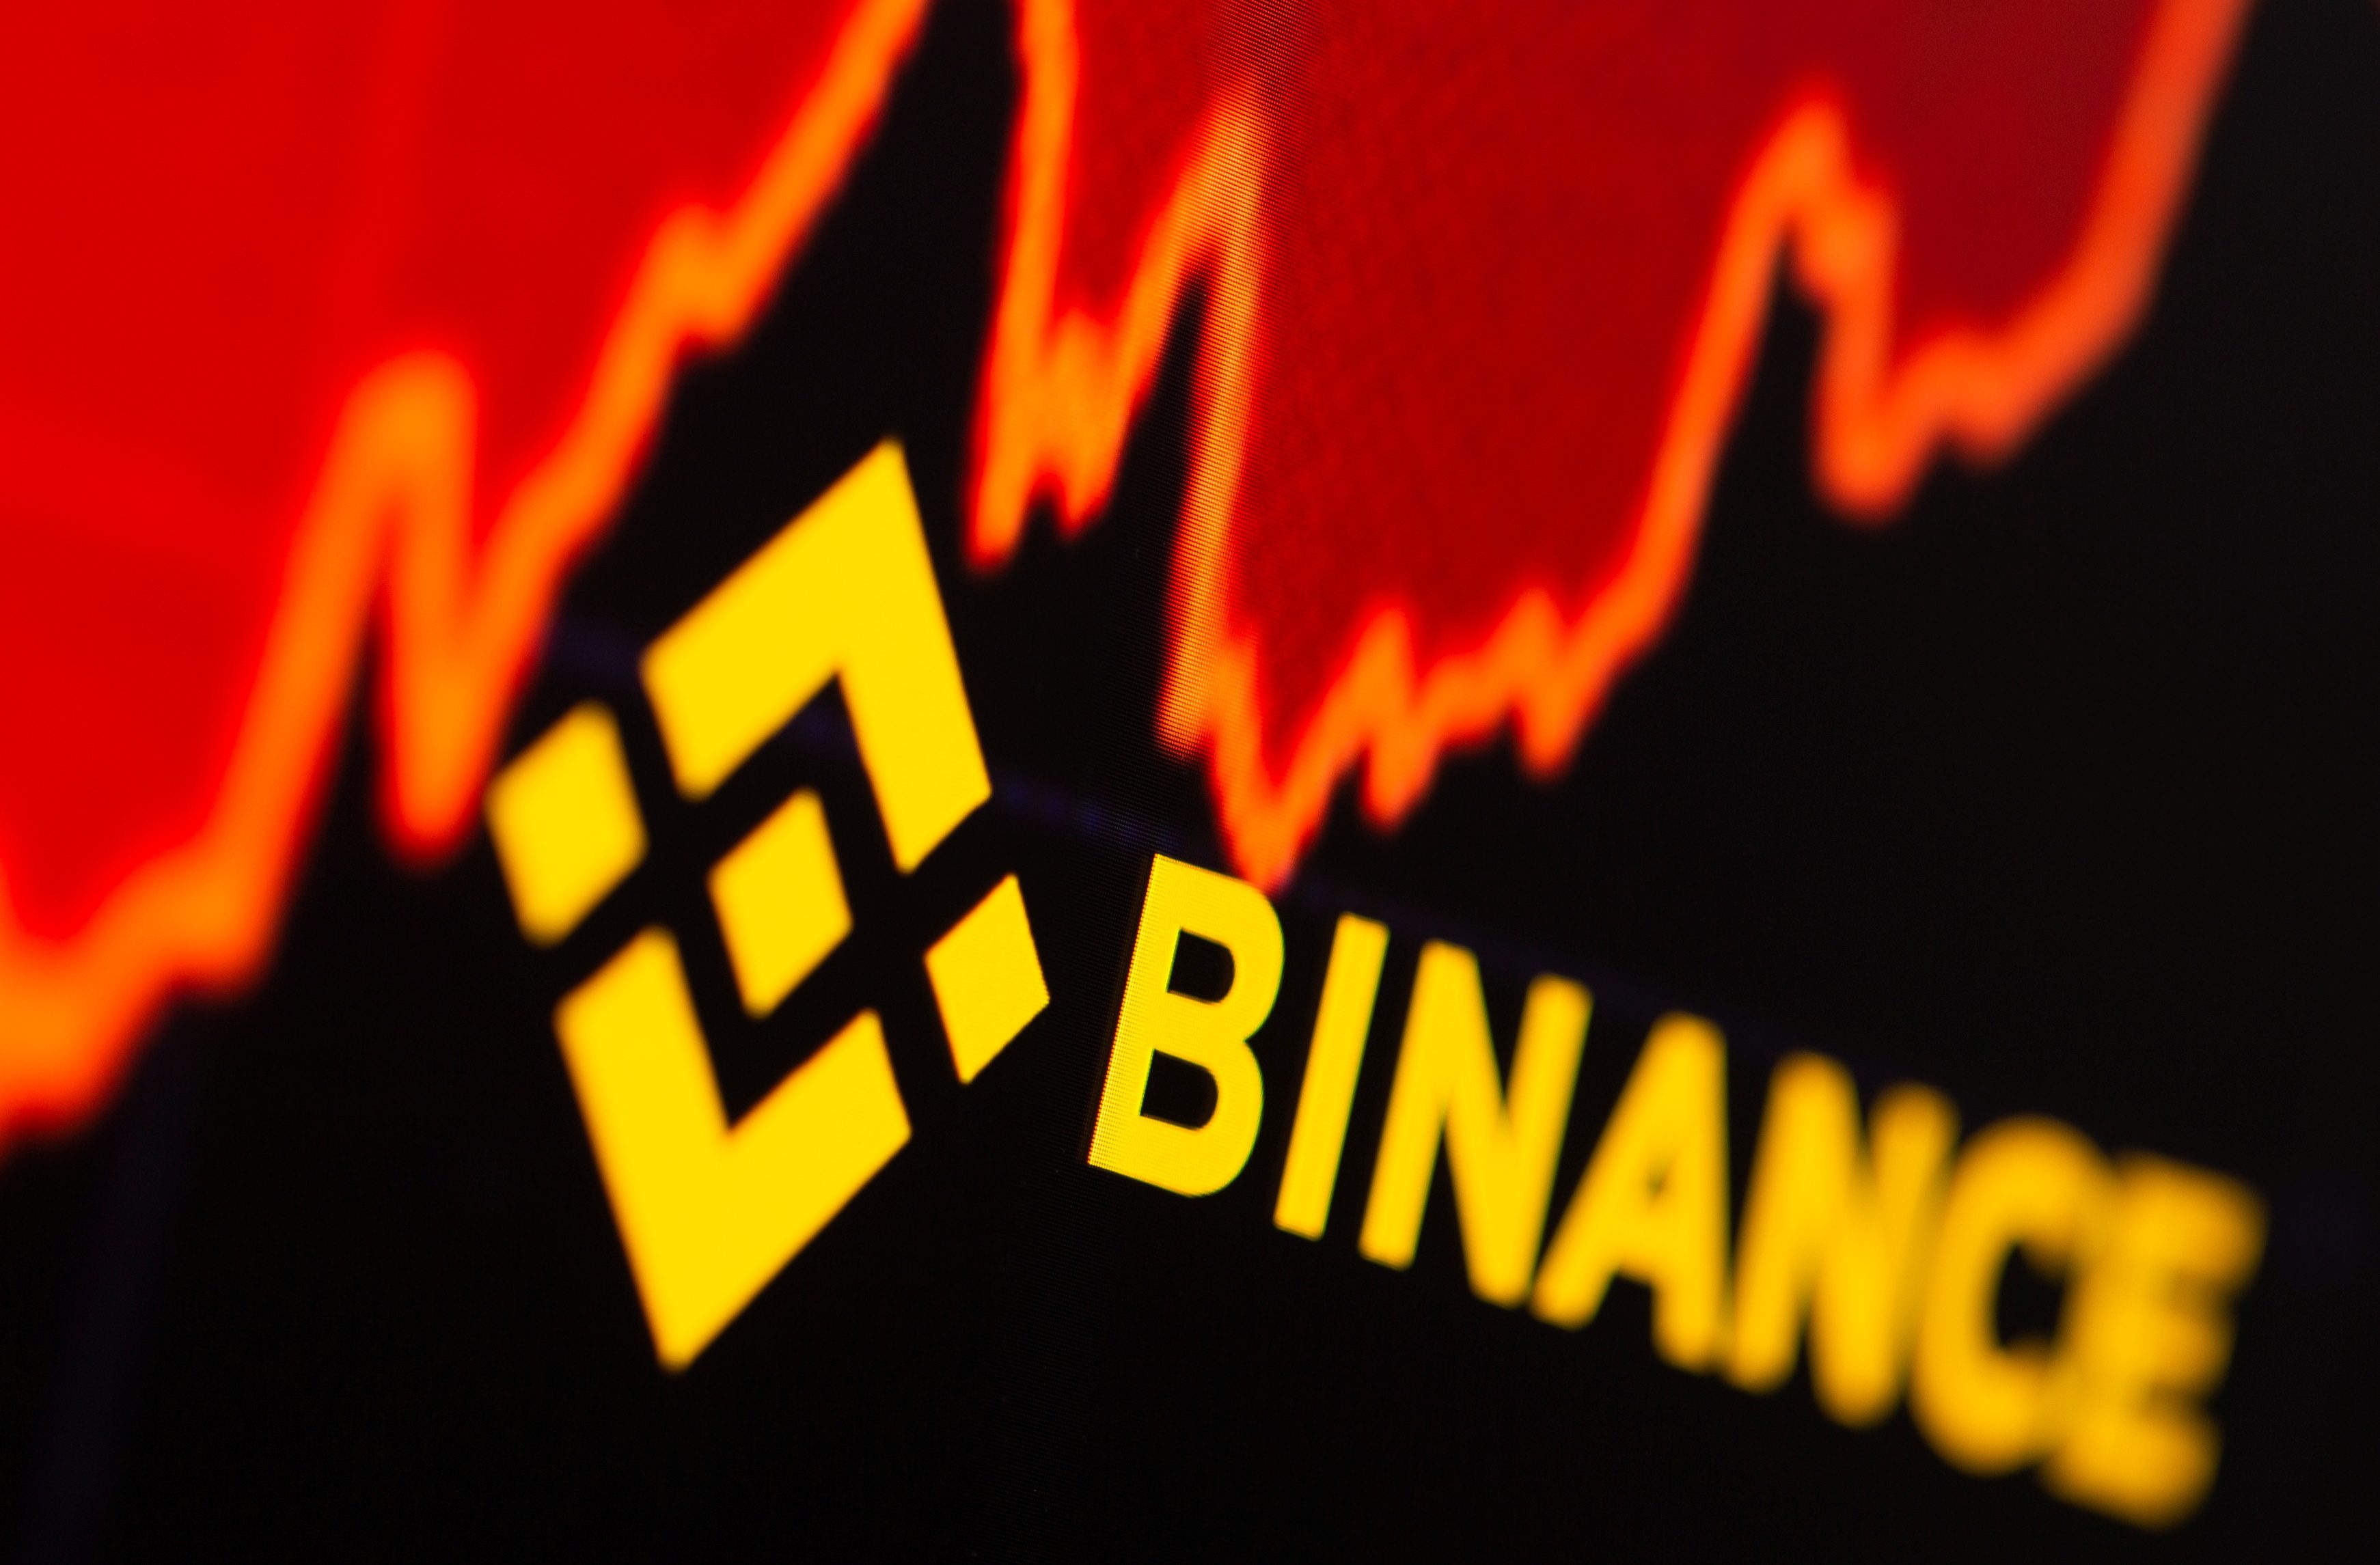 Binance stops selling ‘stock tokens’ after regulatory scrutiny